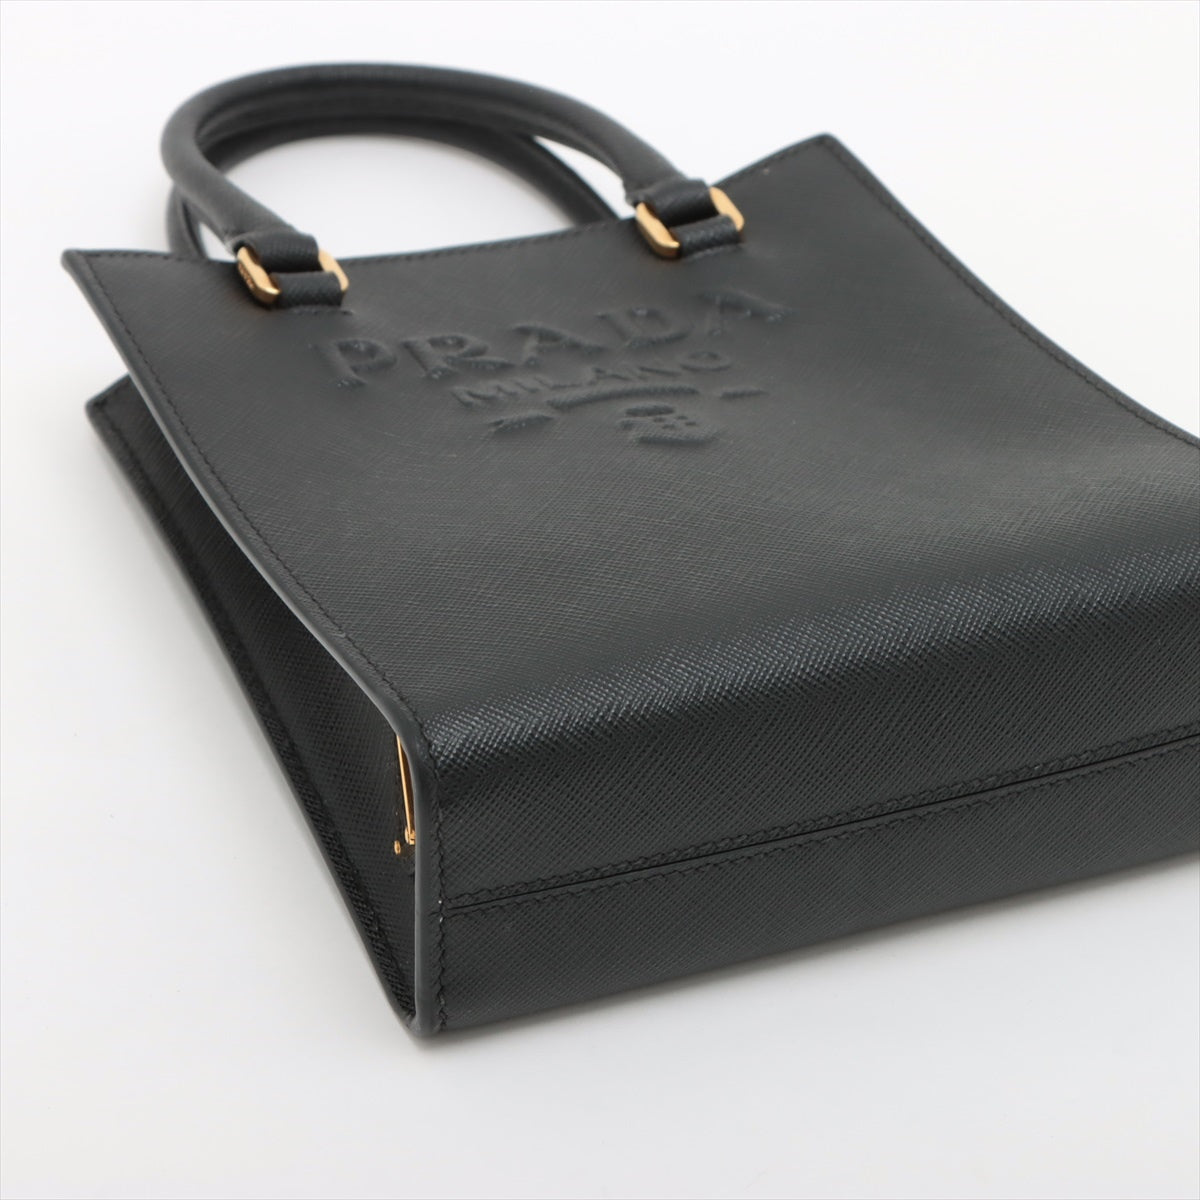 Prada Saffiano Tote Bag Black Without strap